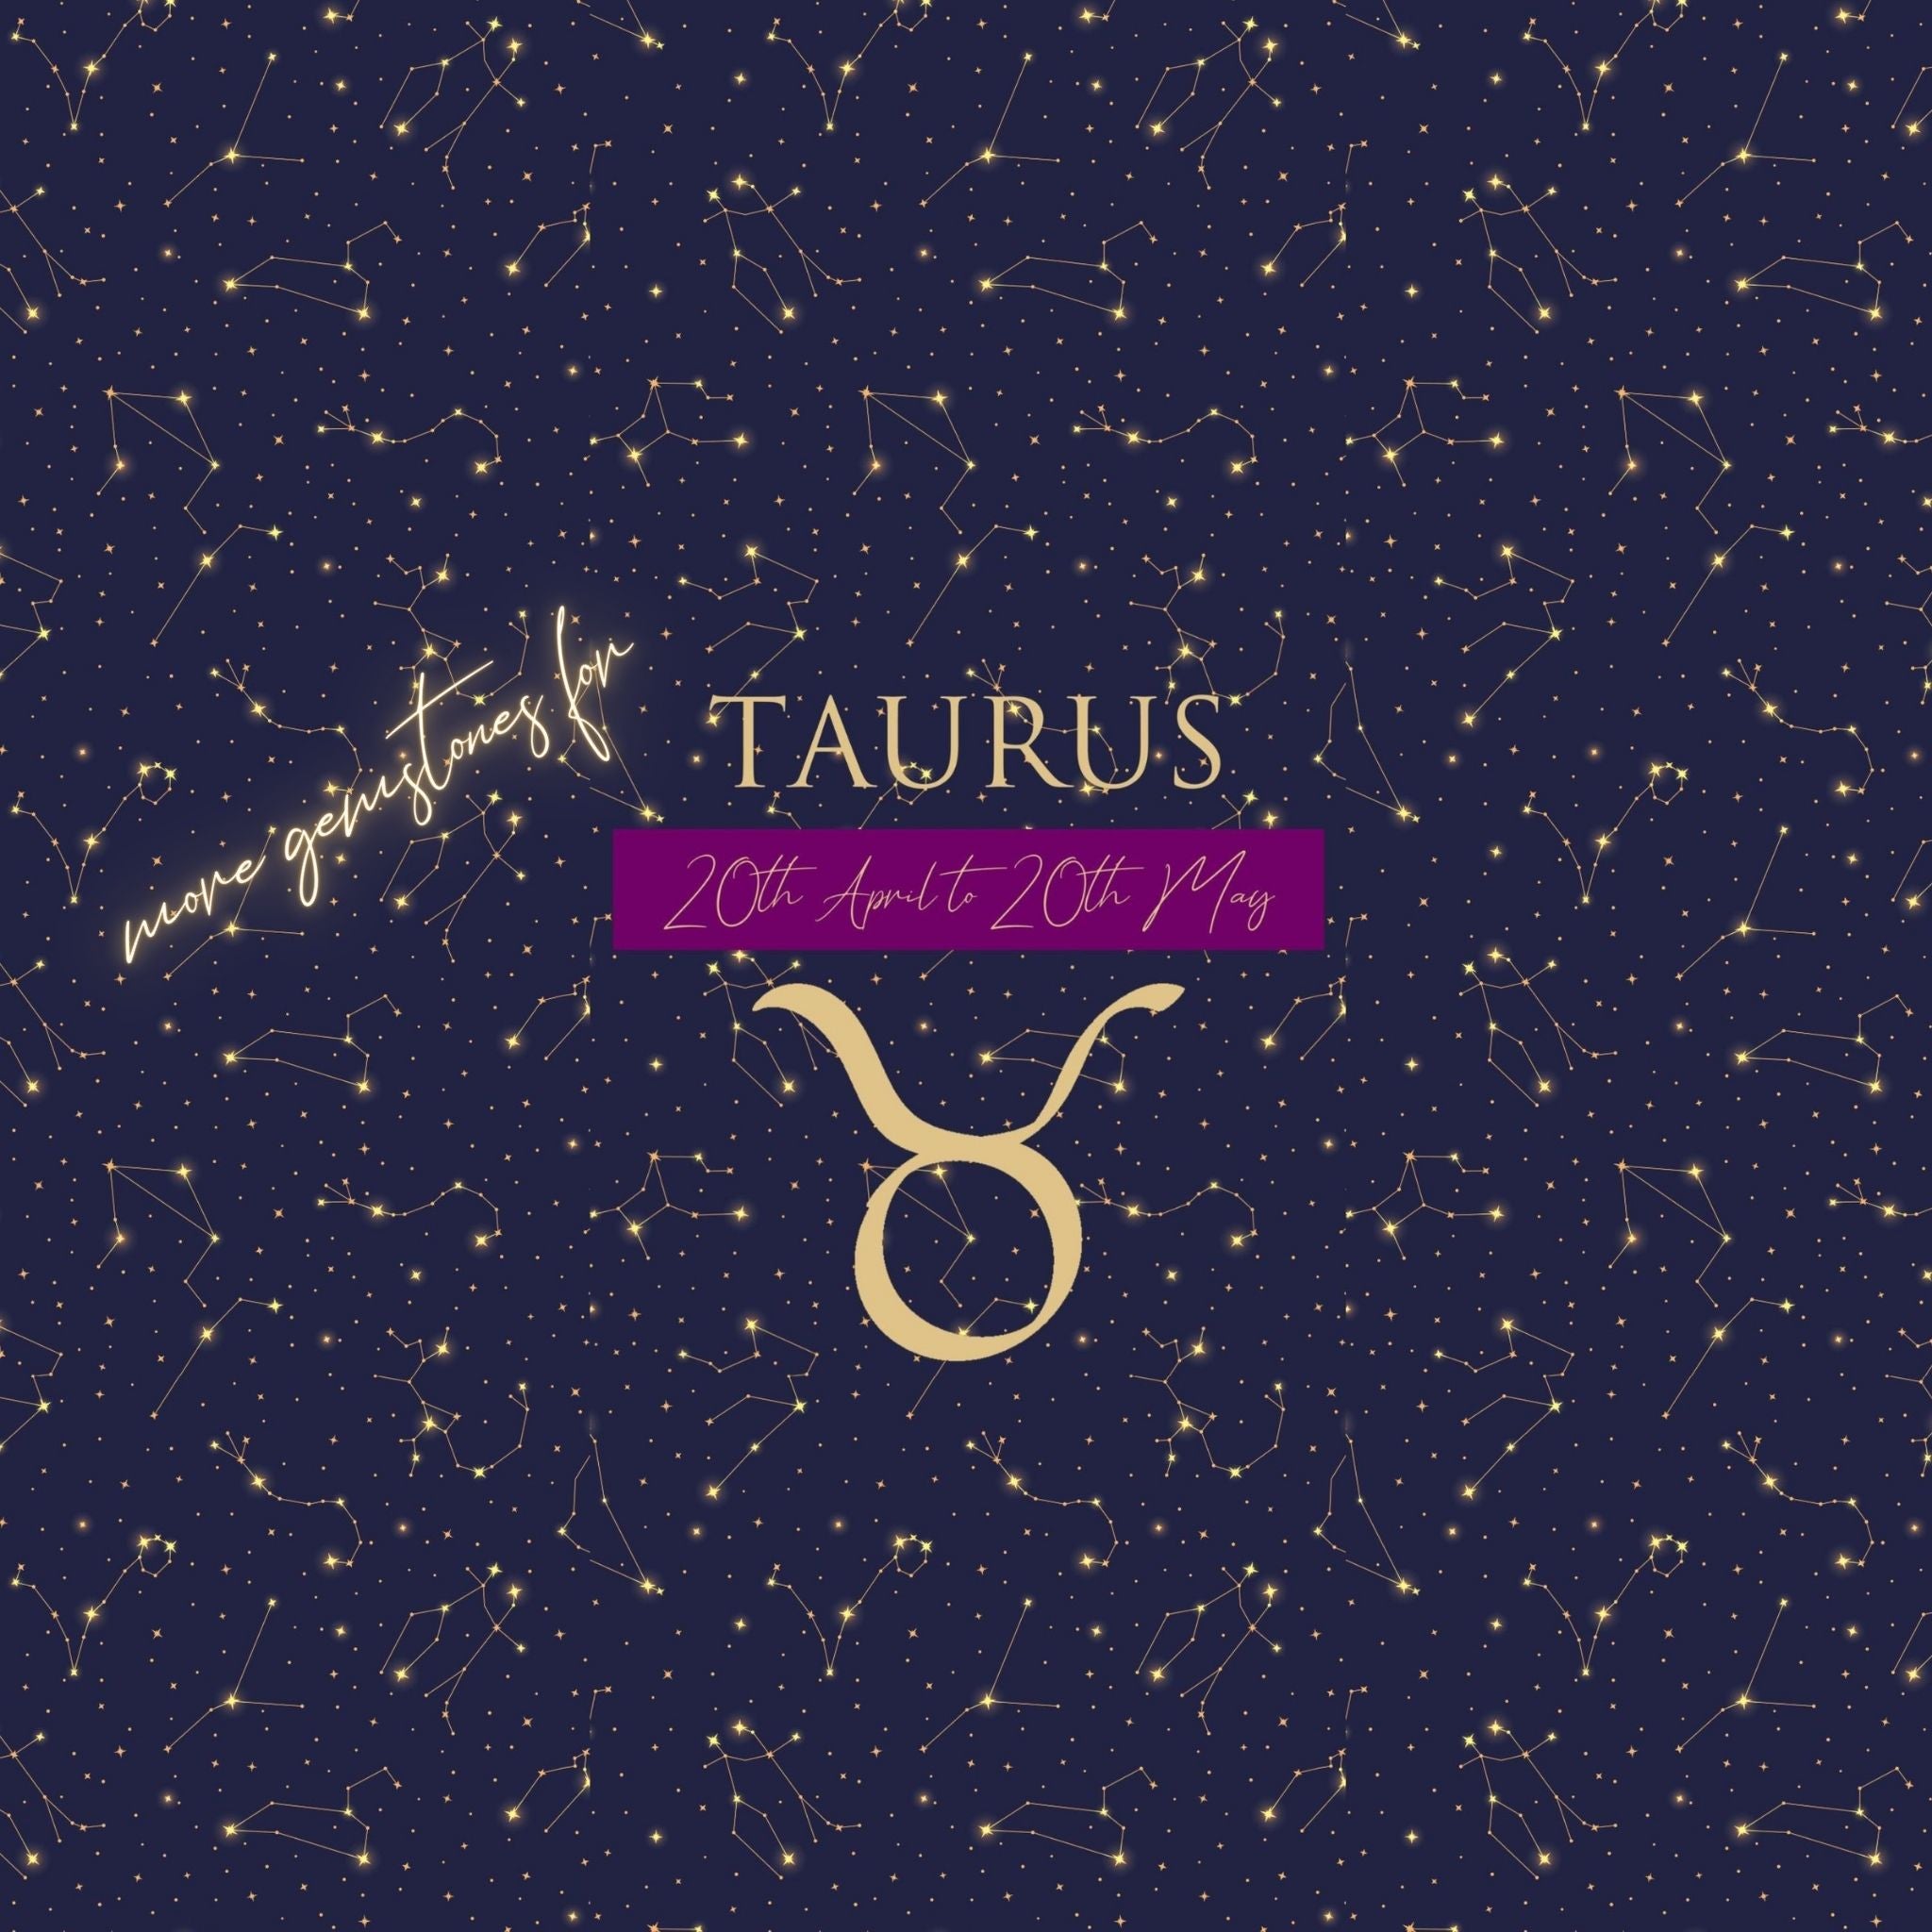 Taurus symbol April 20th to May 20th